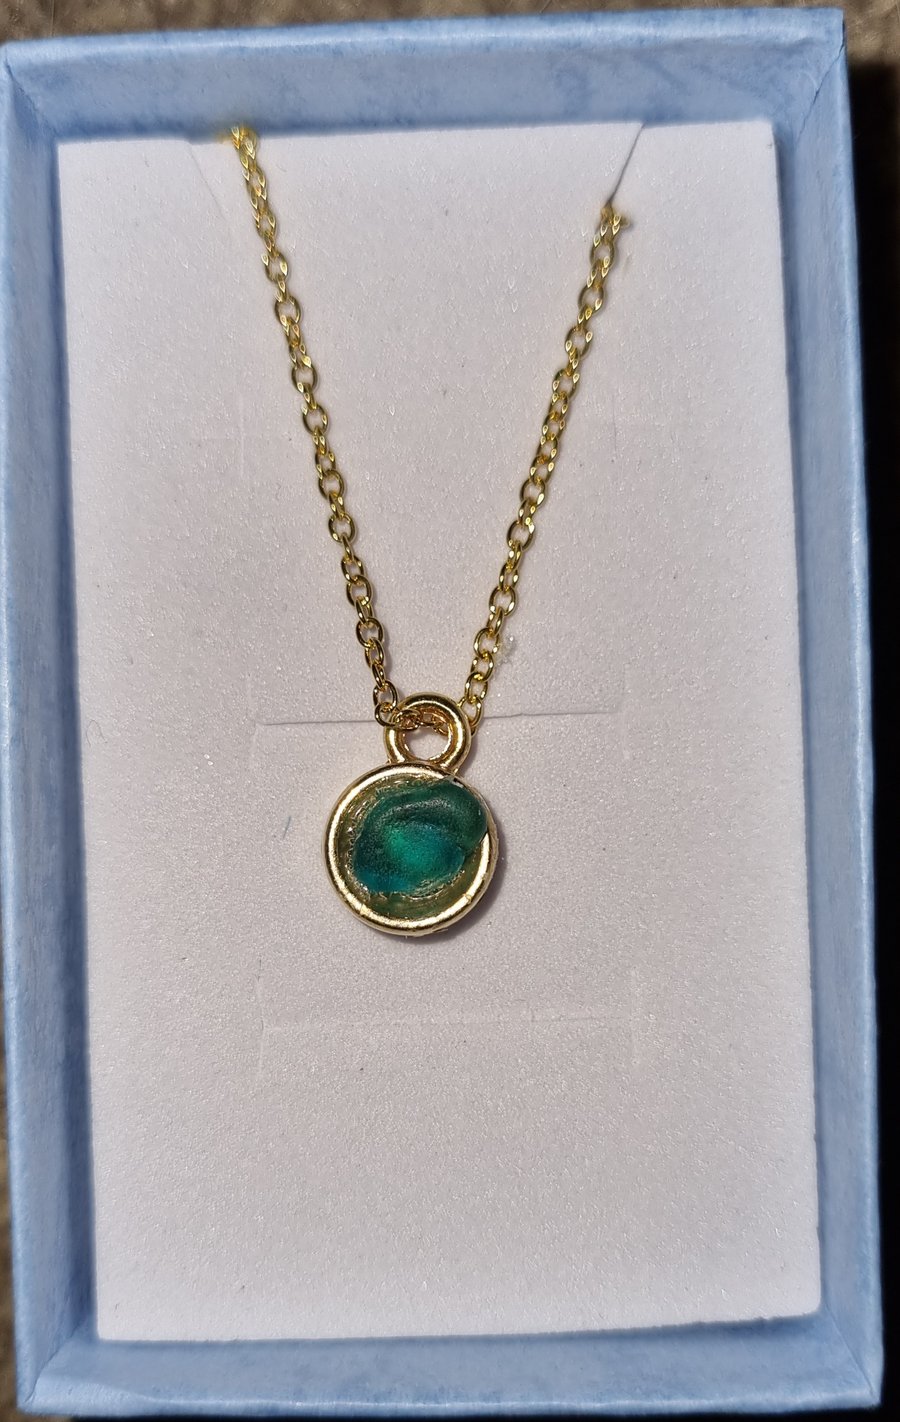 Green seaglass pendant